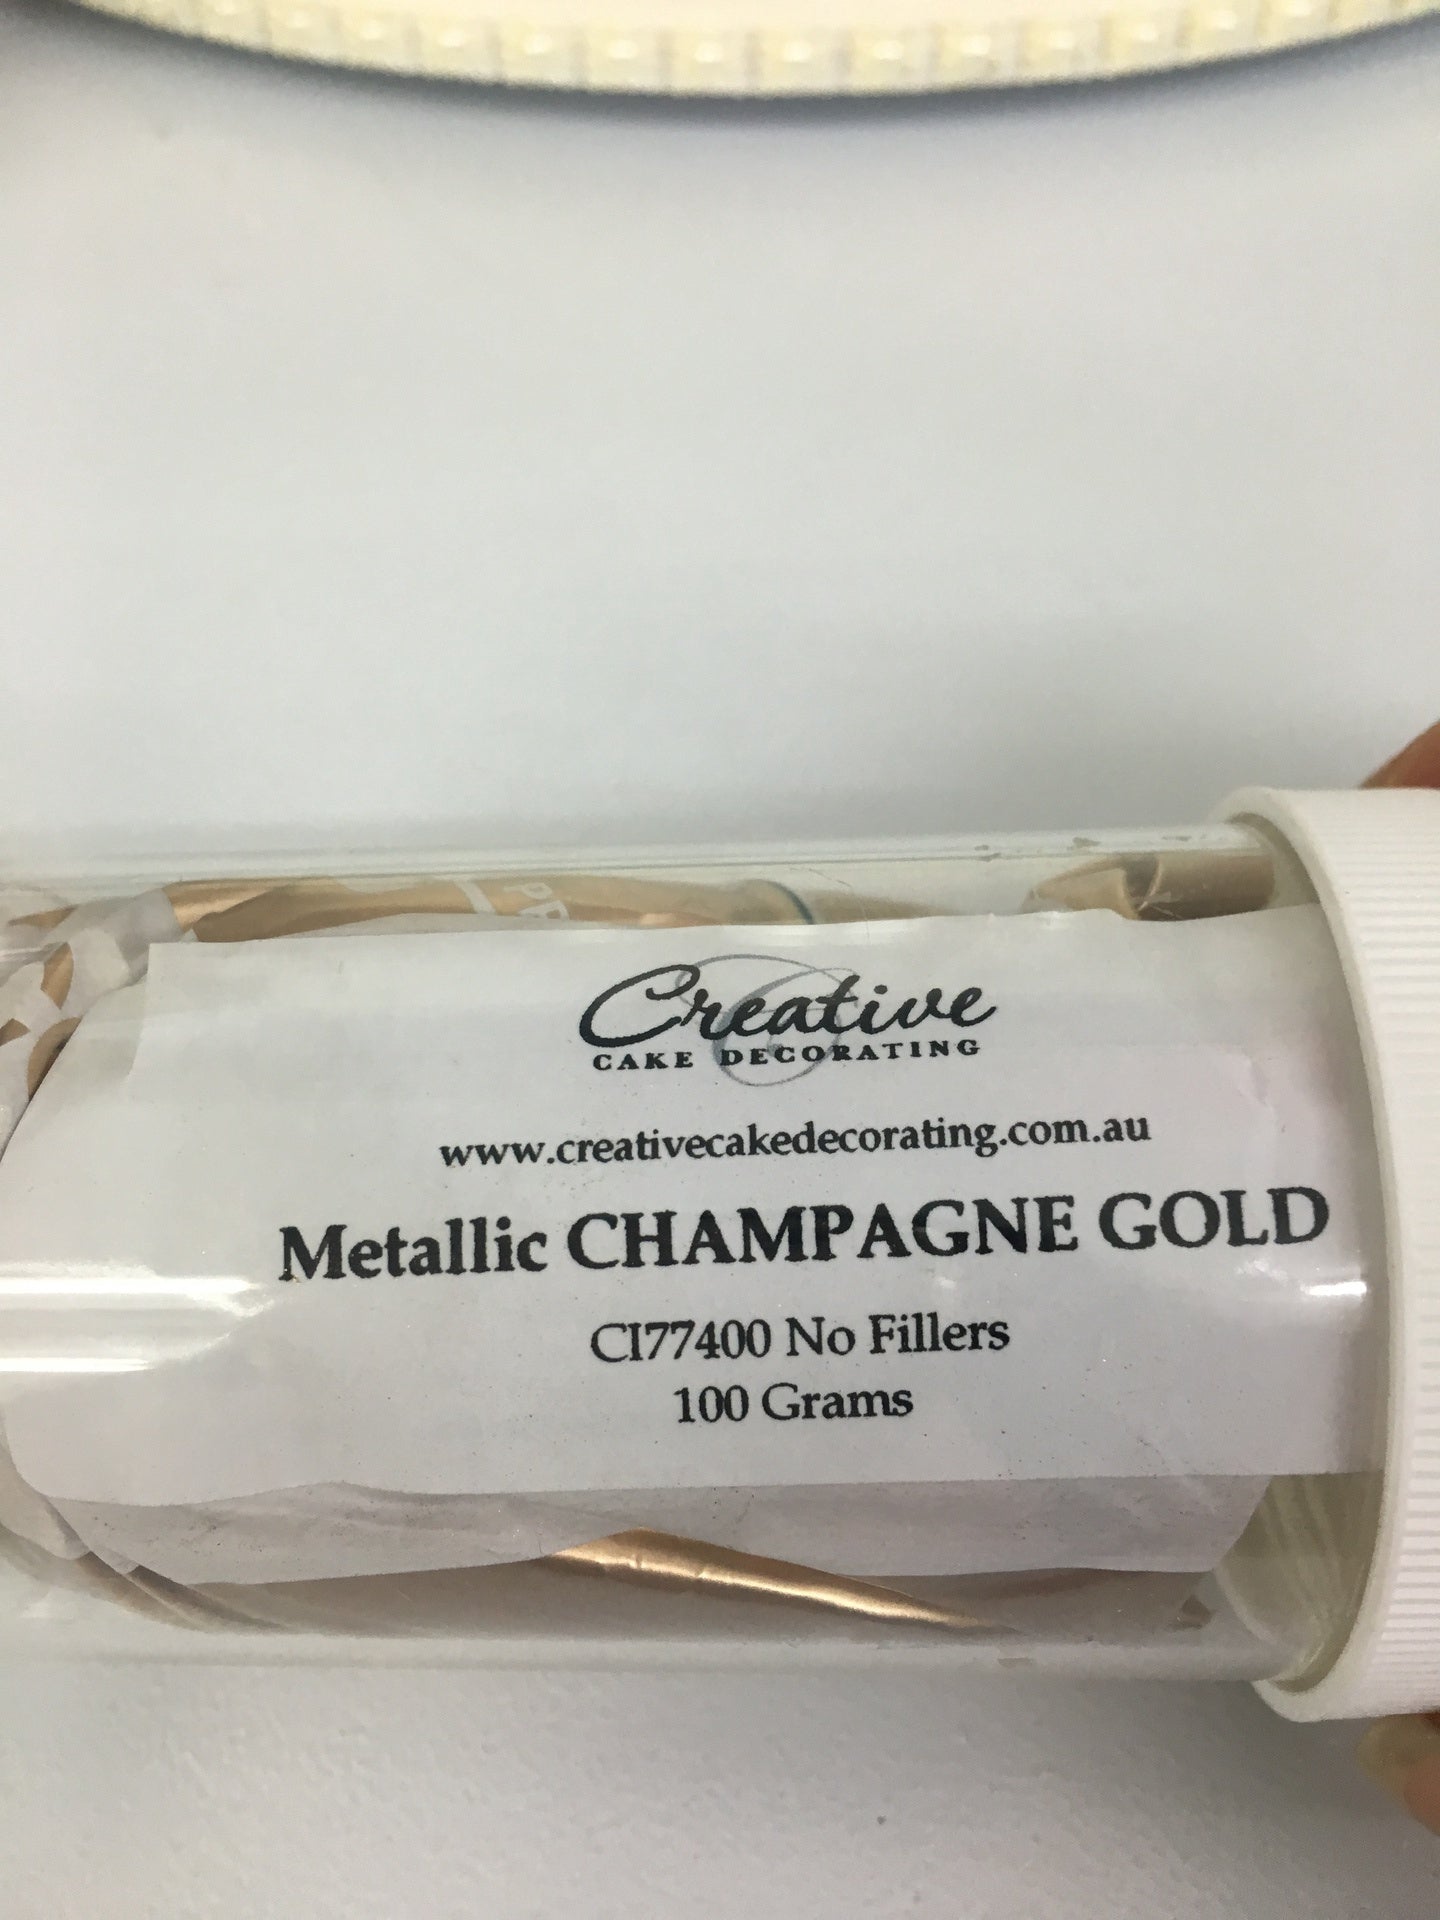 Metallic Champagne Gold 100g